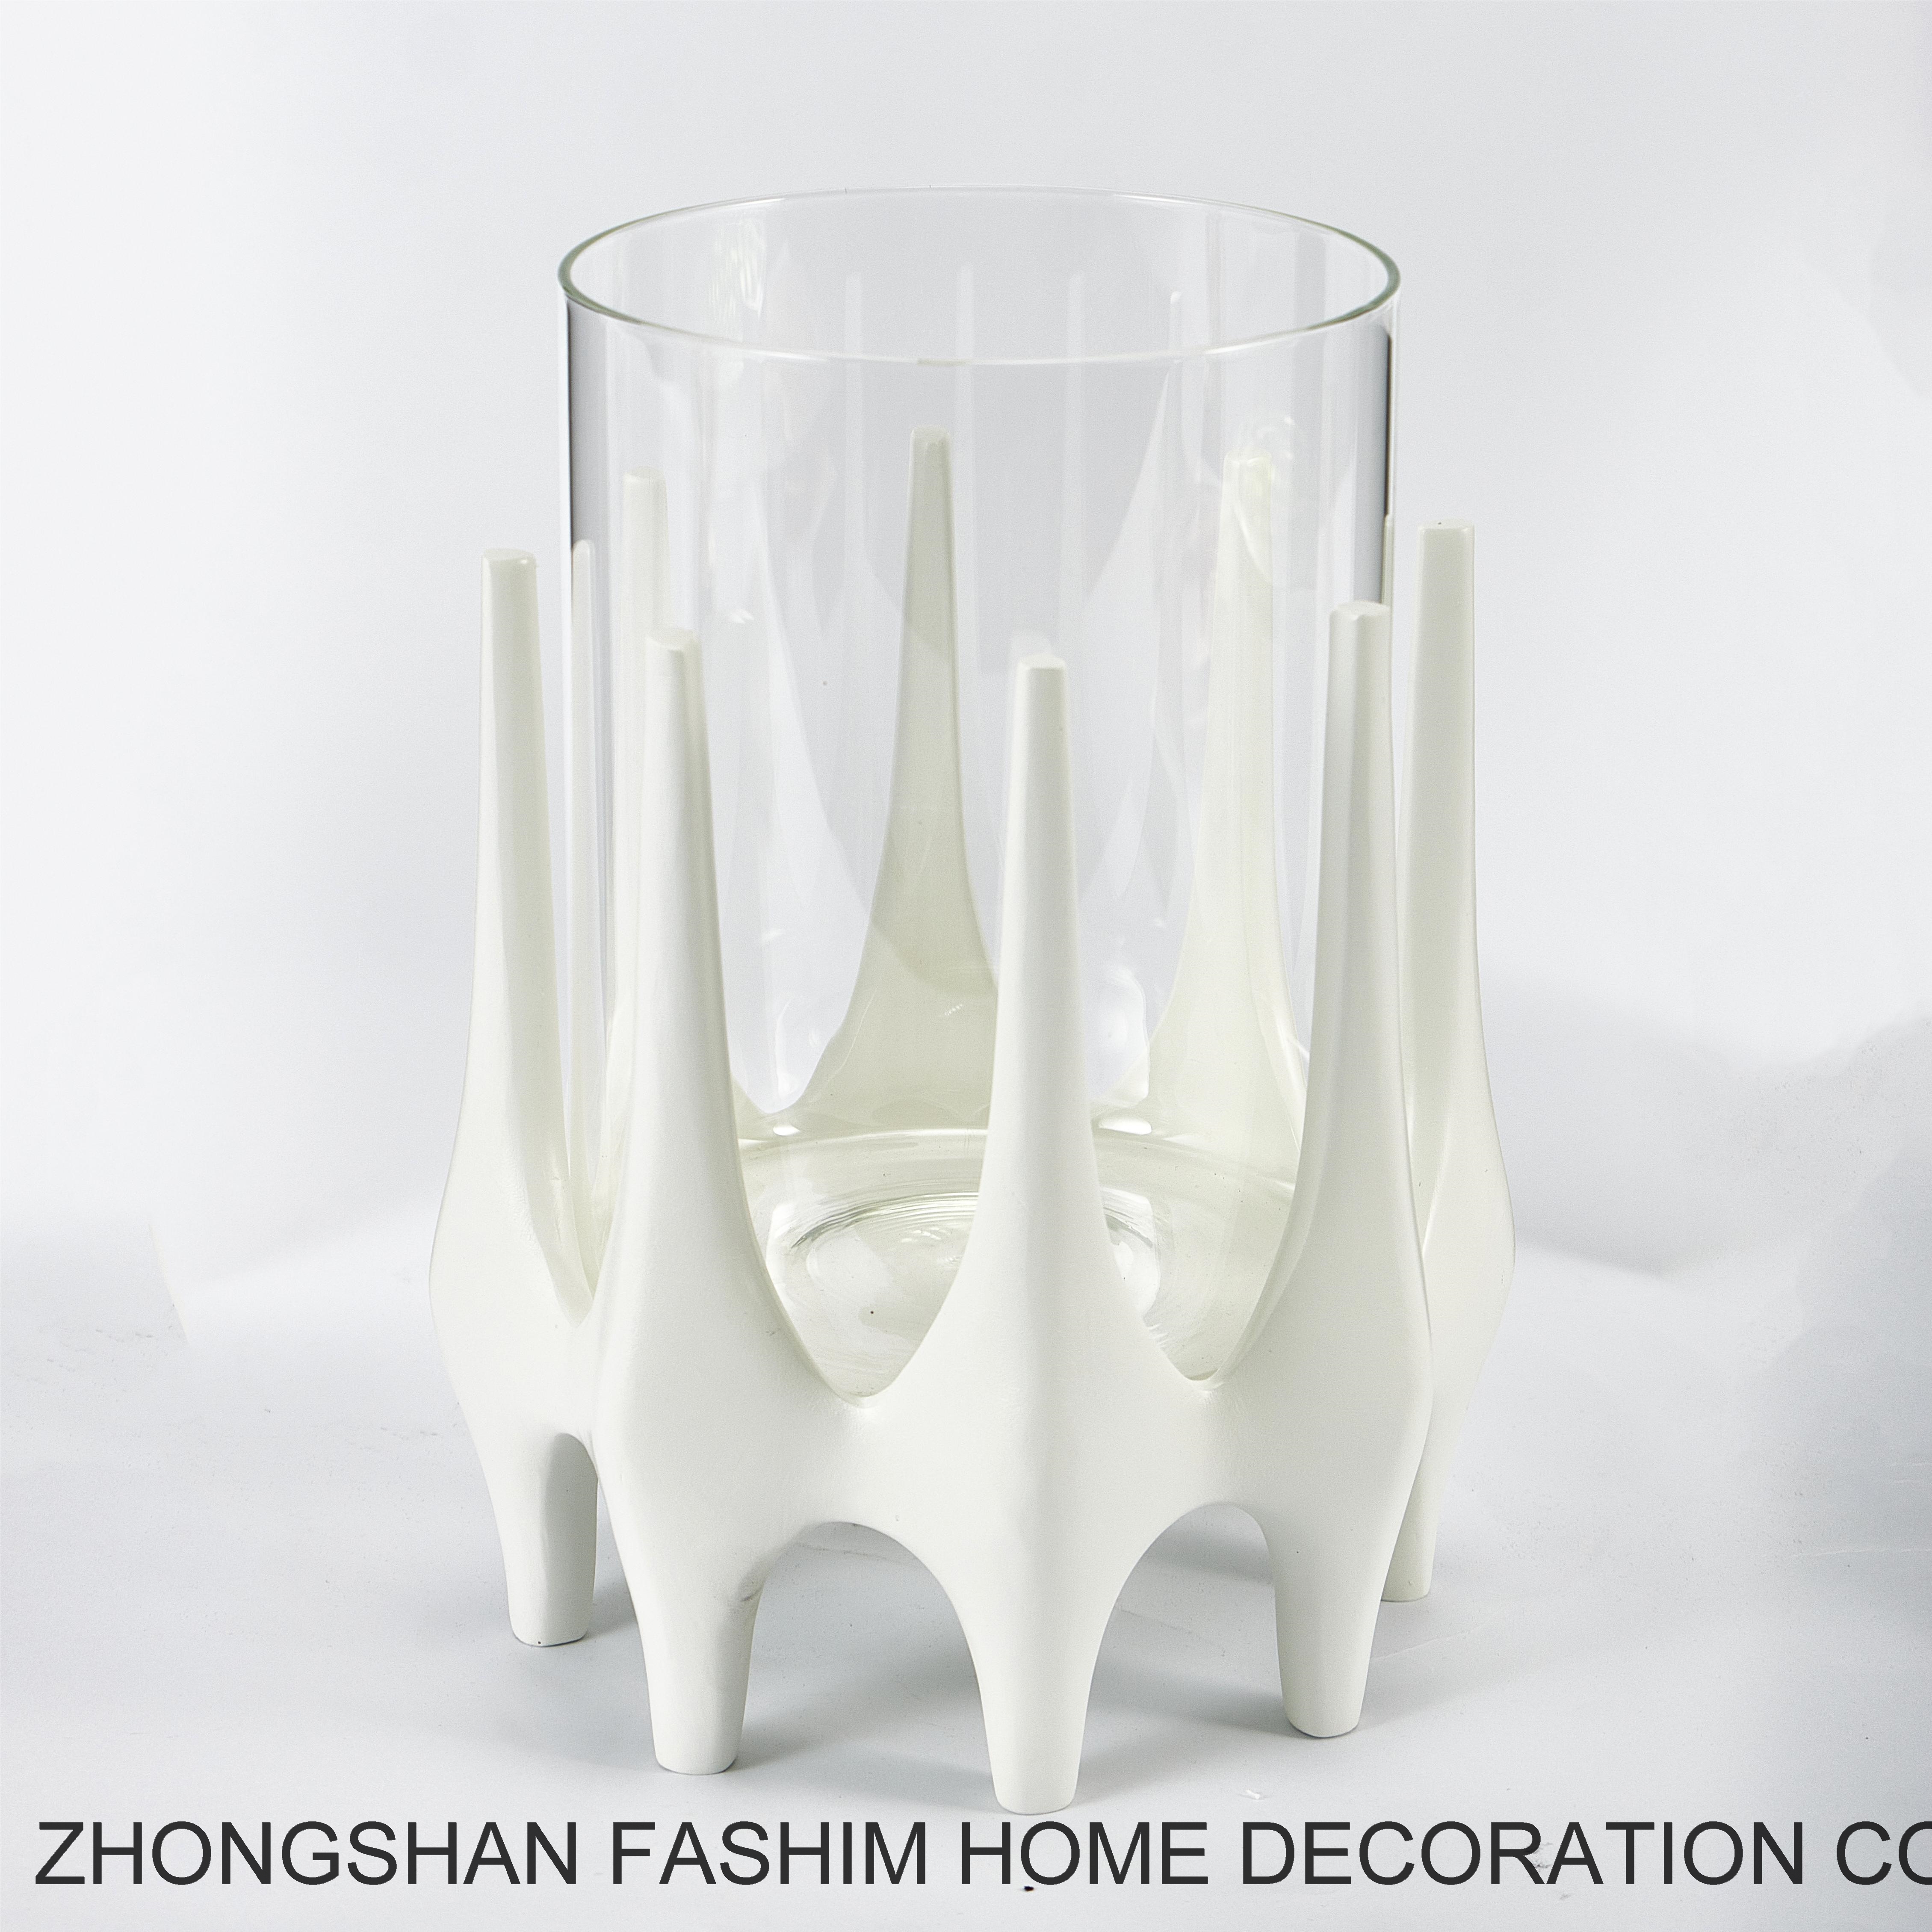 Fashimdecor home decoration ornamental glass vase